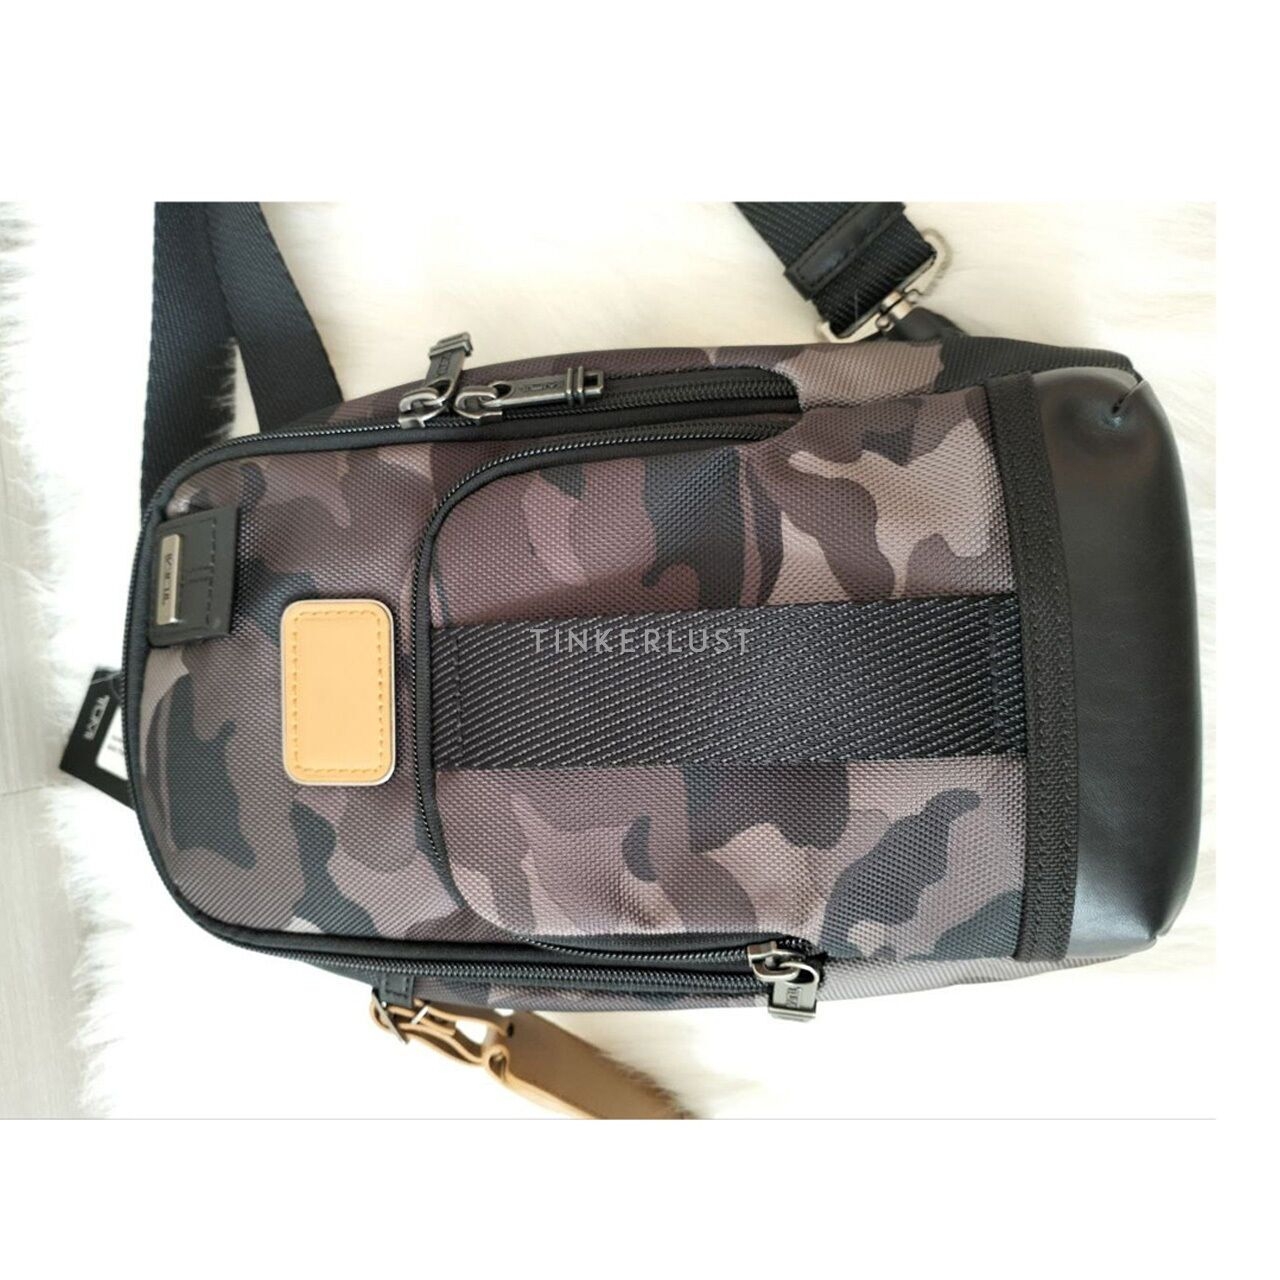 Tumi Fife Sling Bag in Army Black & Dark Grey Sling Bag